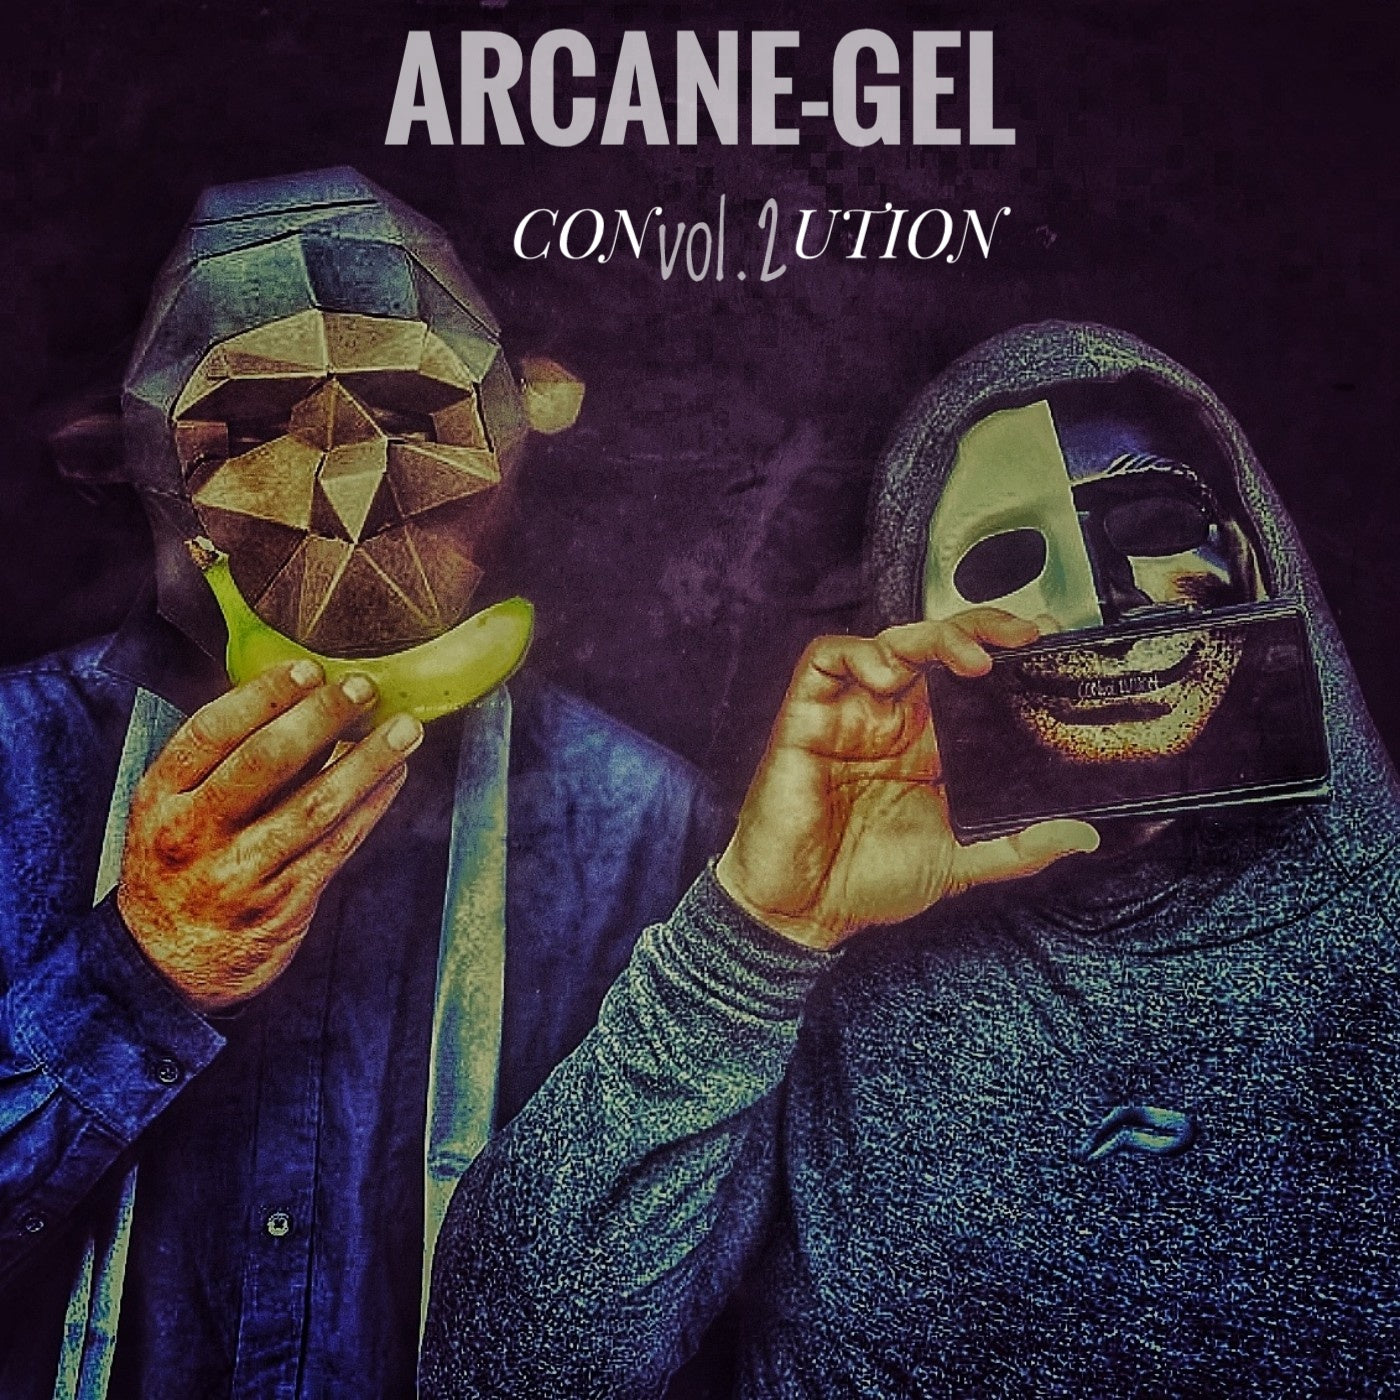 Arcane-Gel - ‘CONvol.2UTION’